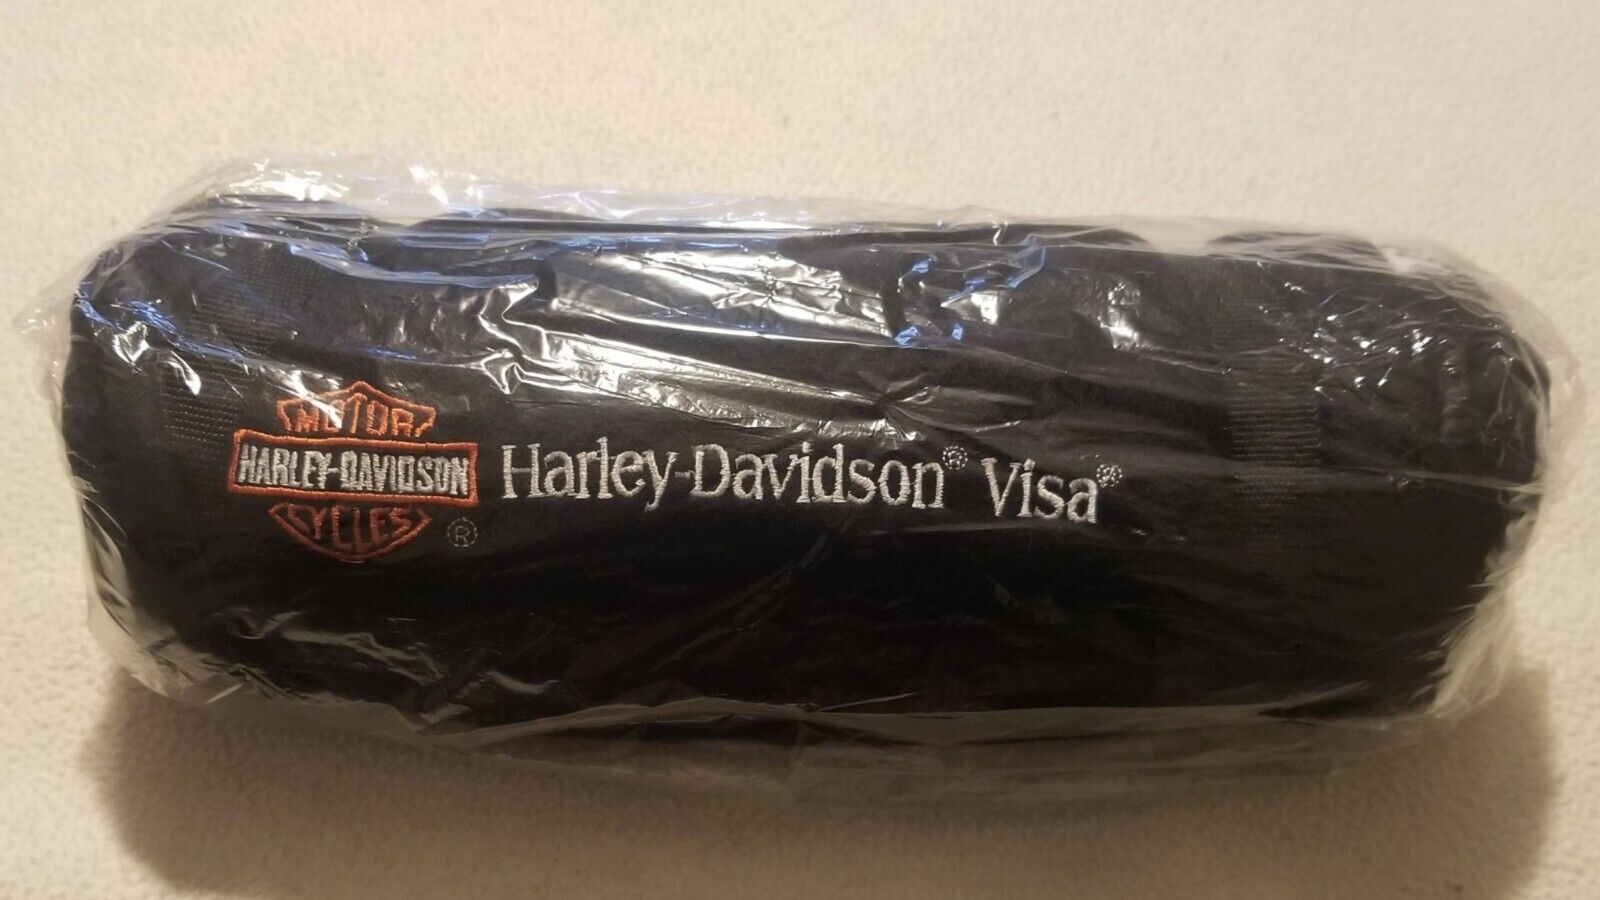 Harley-Davidson Visa Fleece Throw Blanket Roll New in Original Wrapping